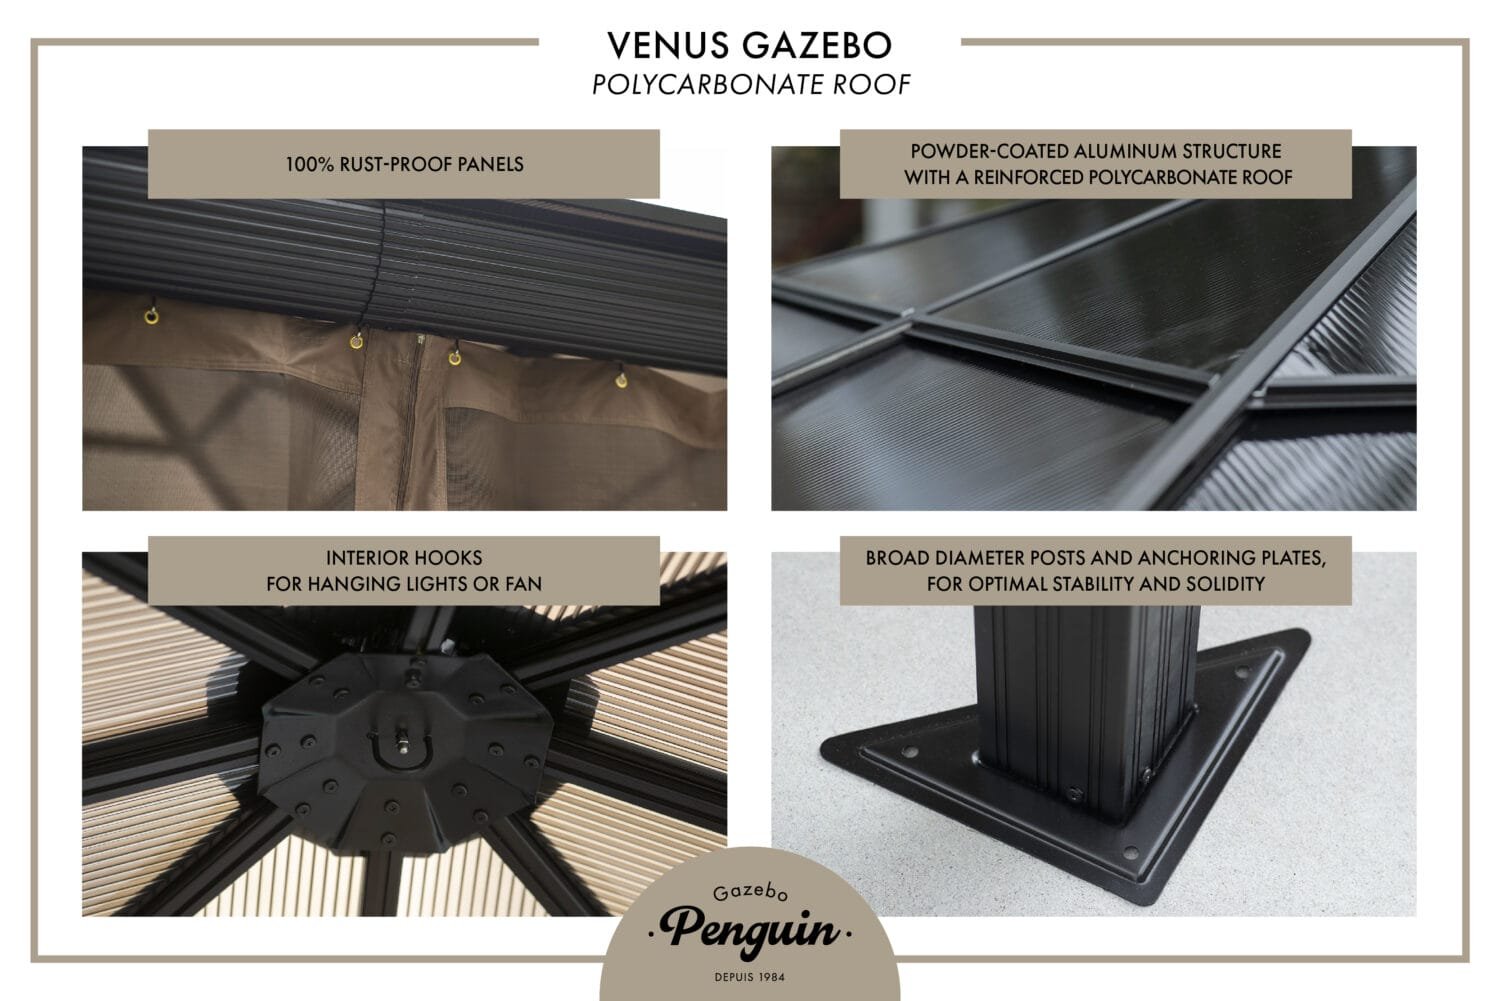 Venus Gazebo 10x10 Polycarbonate Roof 43200 22 060051432014 (15)